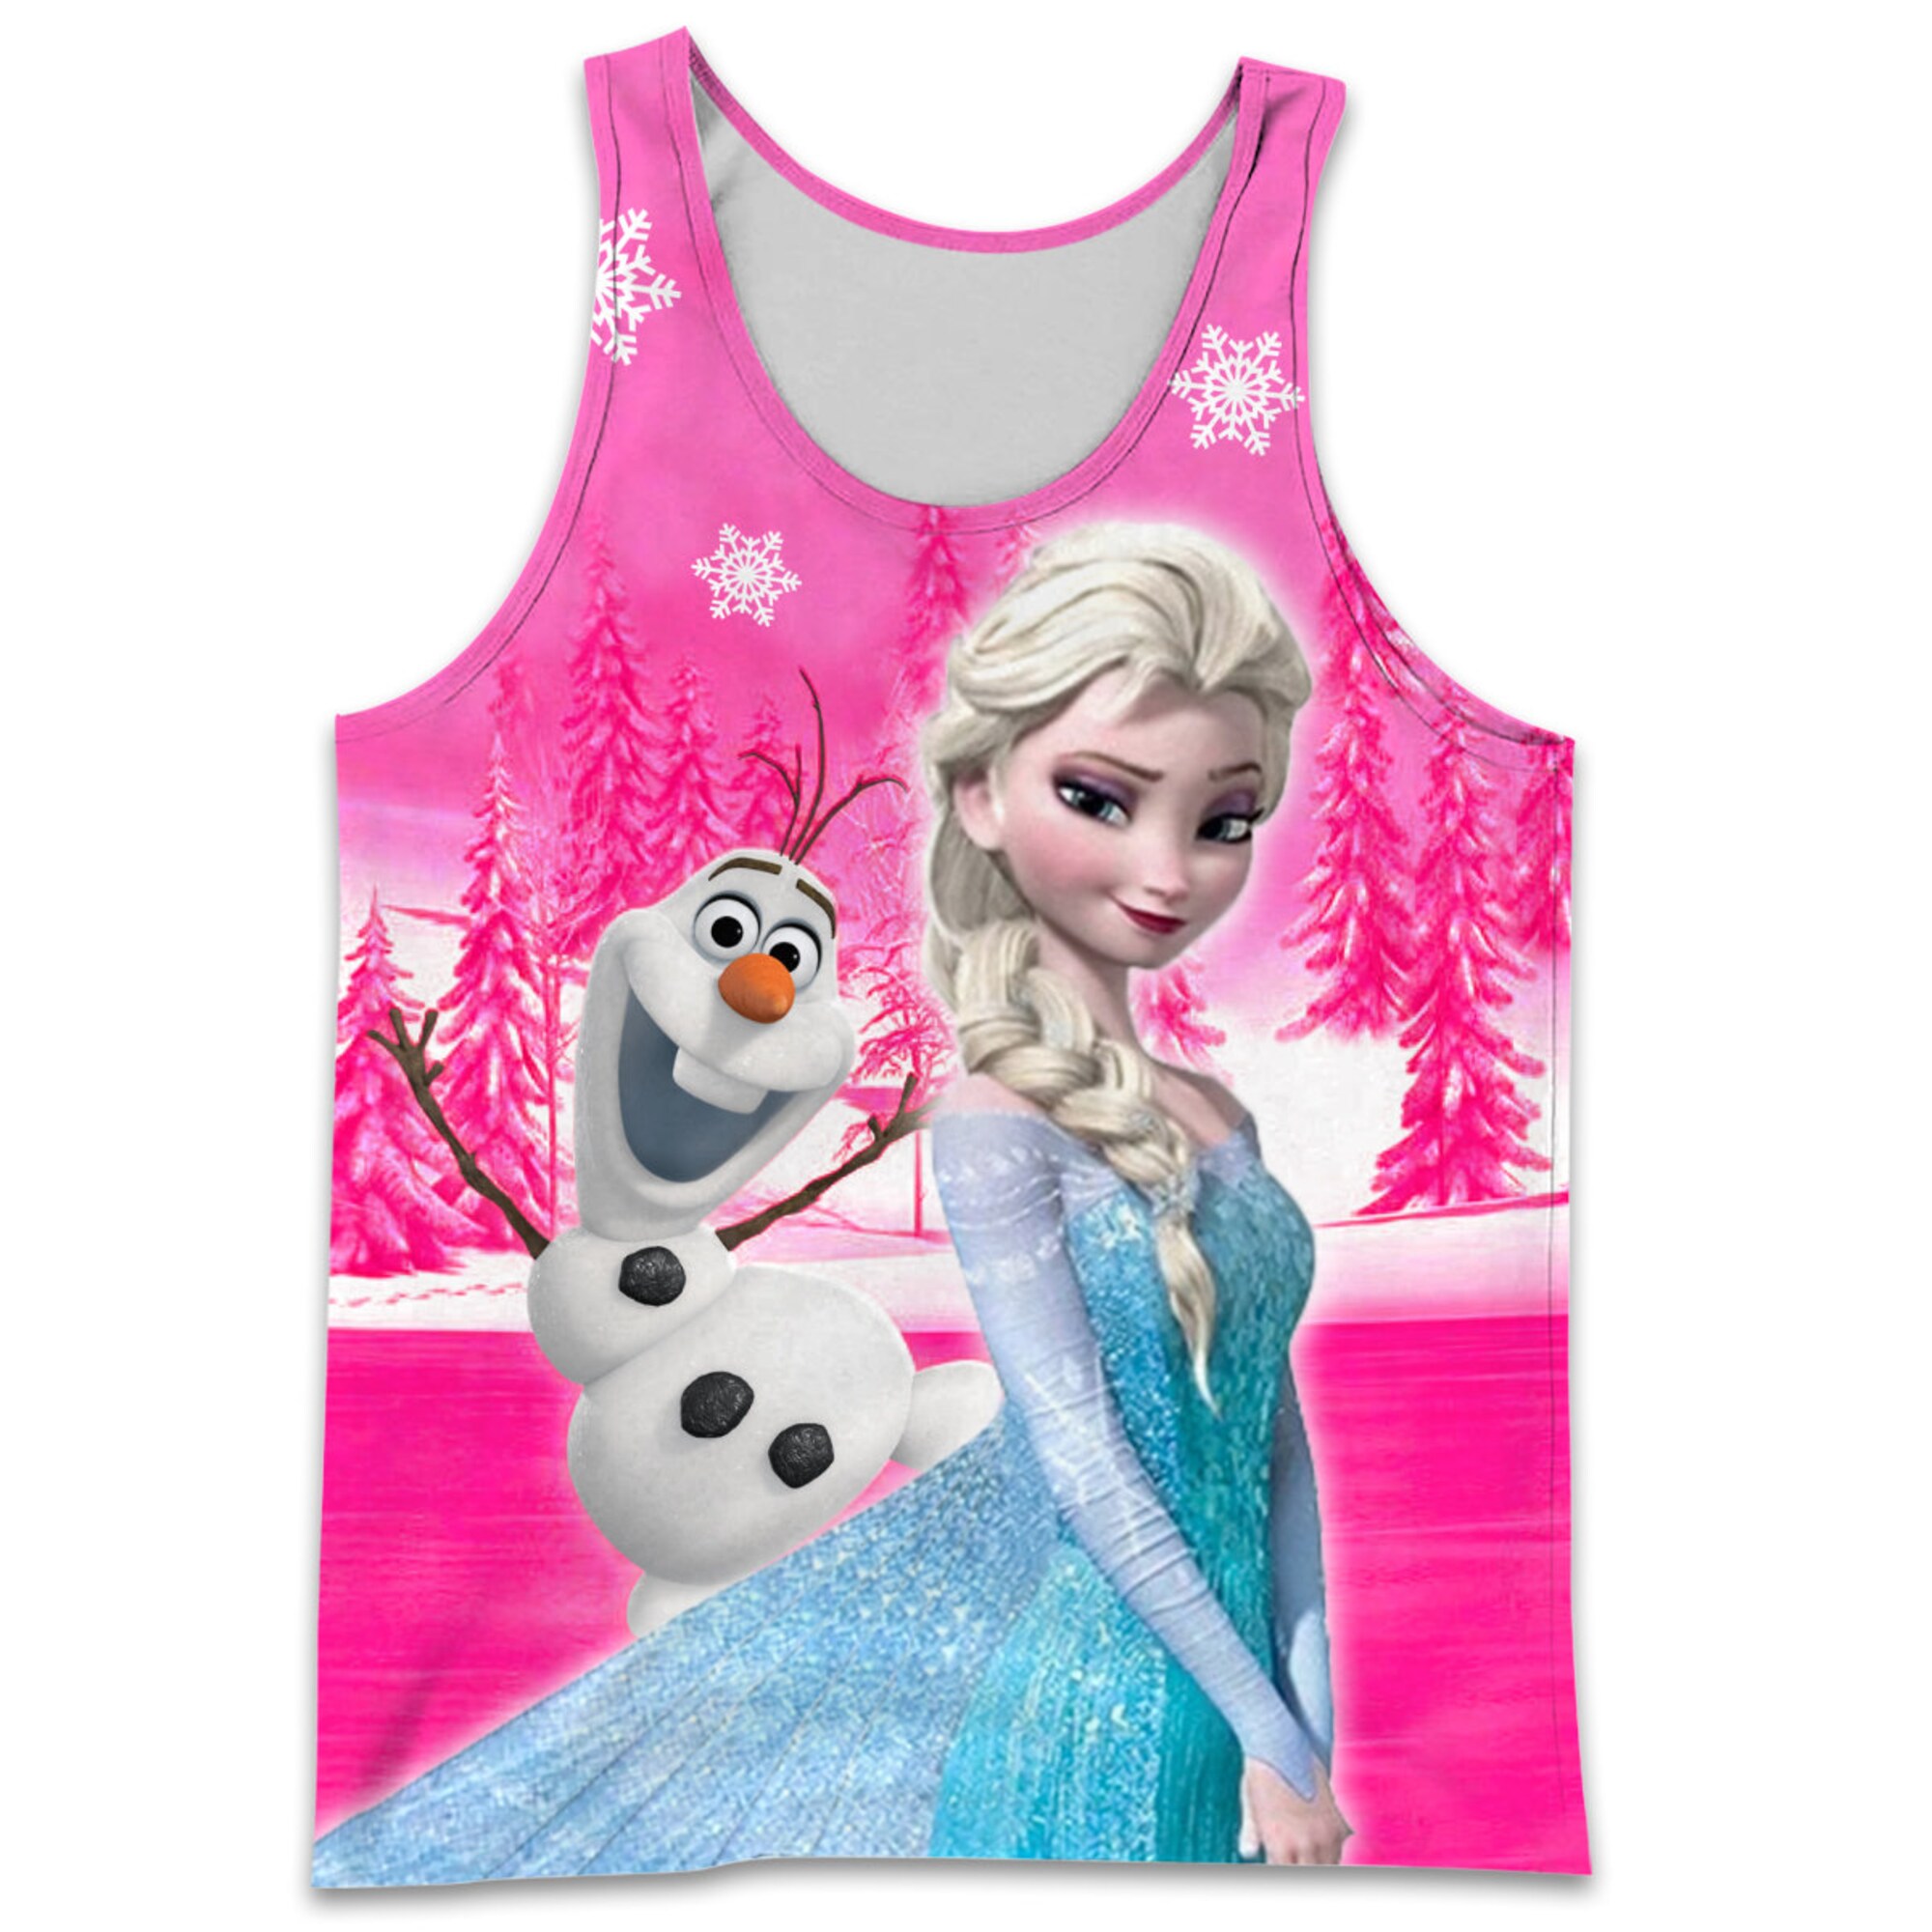 Olaf Elsa Frozen Pink Glitter Bling Full Print Disney Cartoon 3D Tank Top